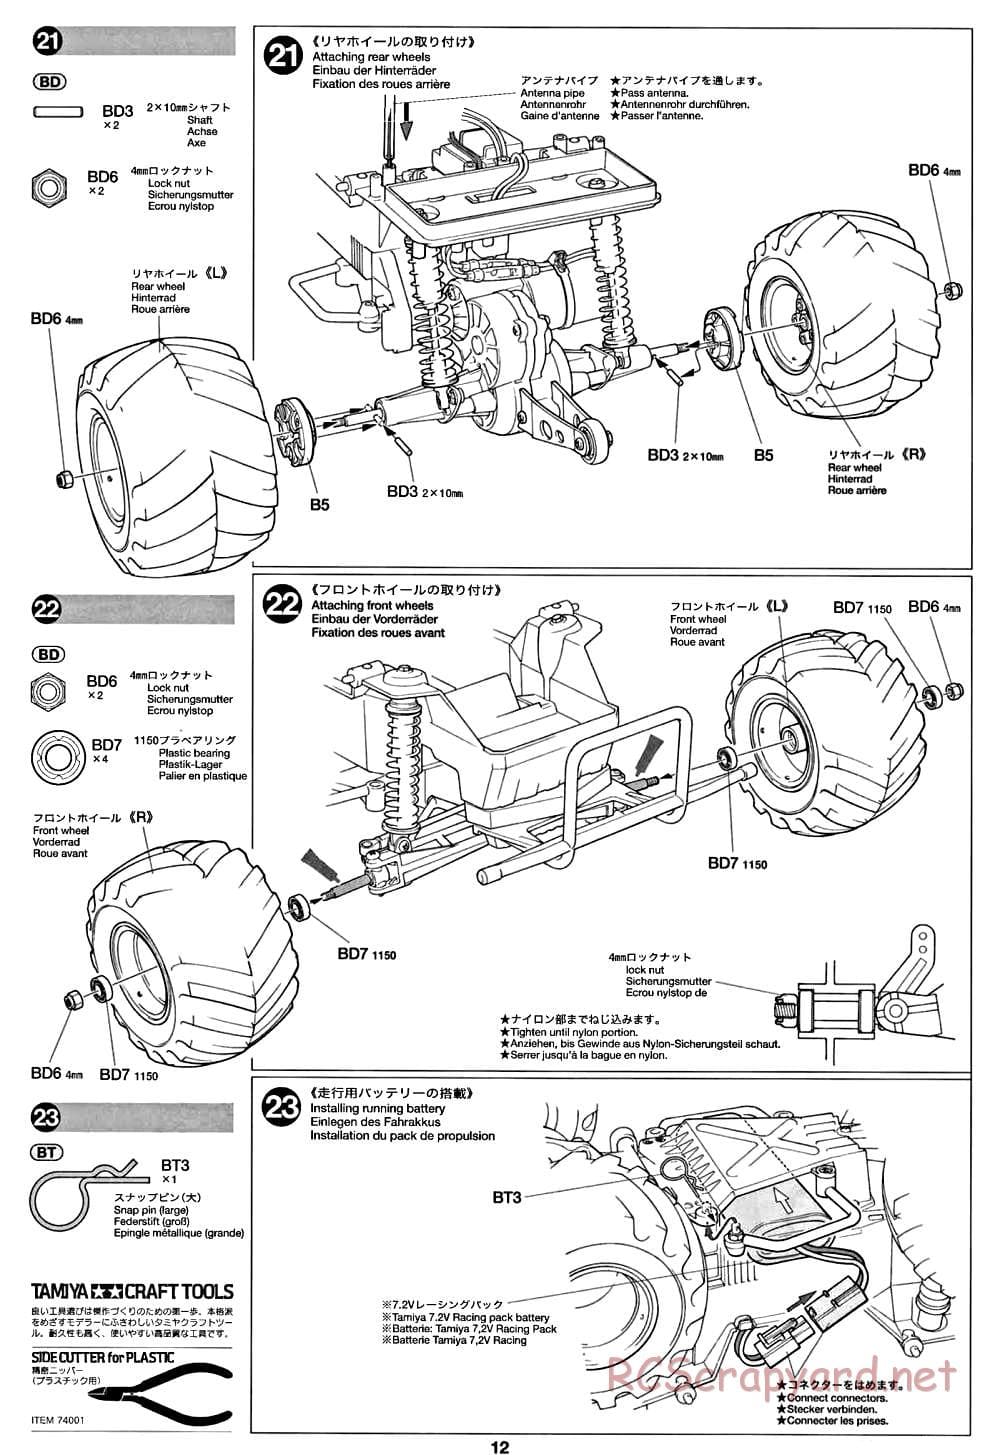 Tamiya - CW-01 Chassis - Manual - Page 12